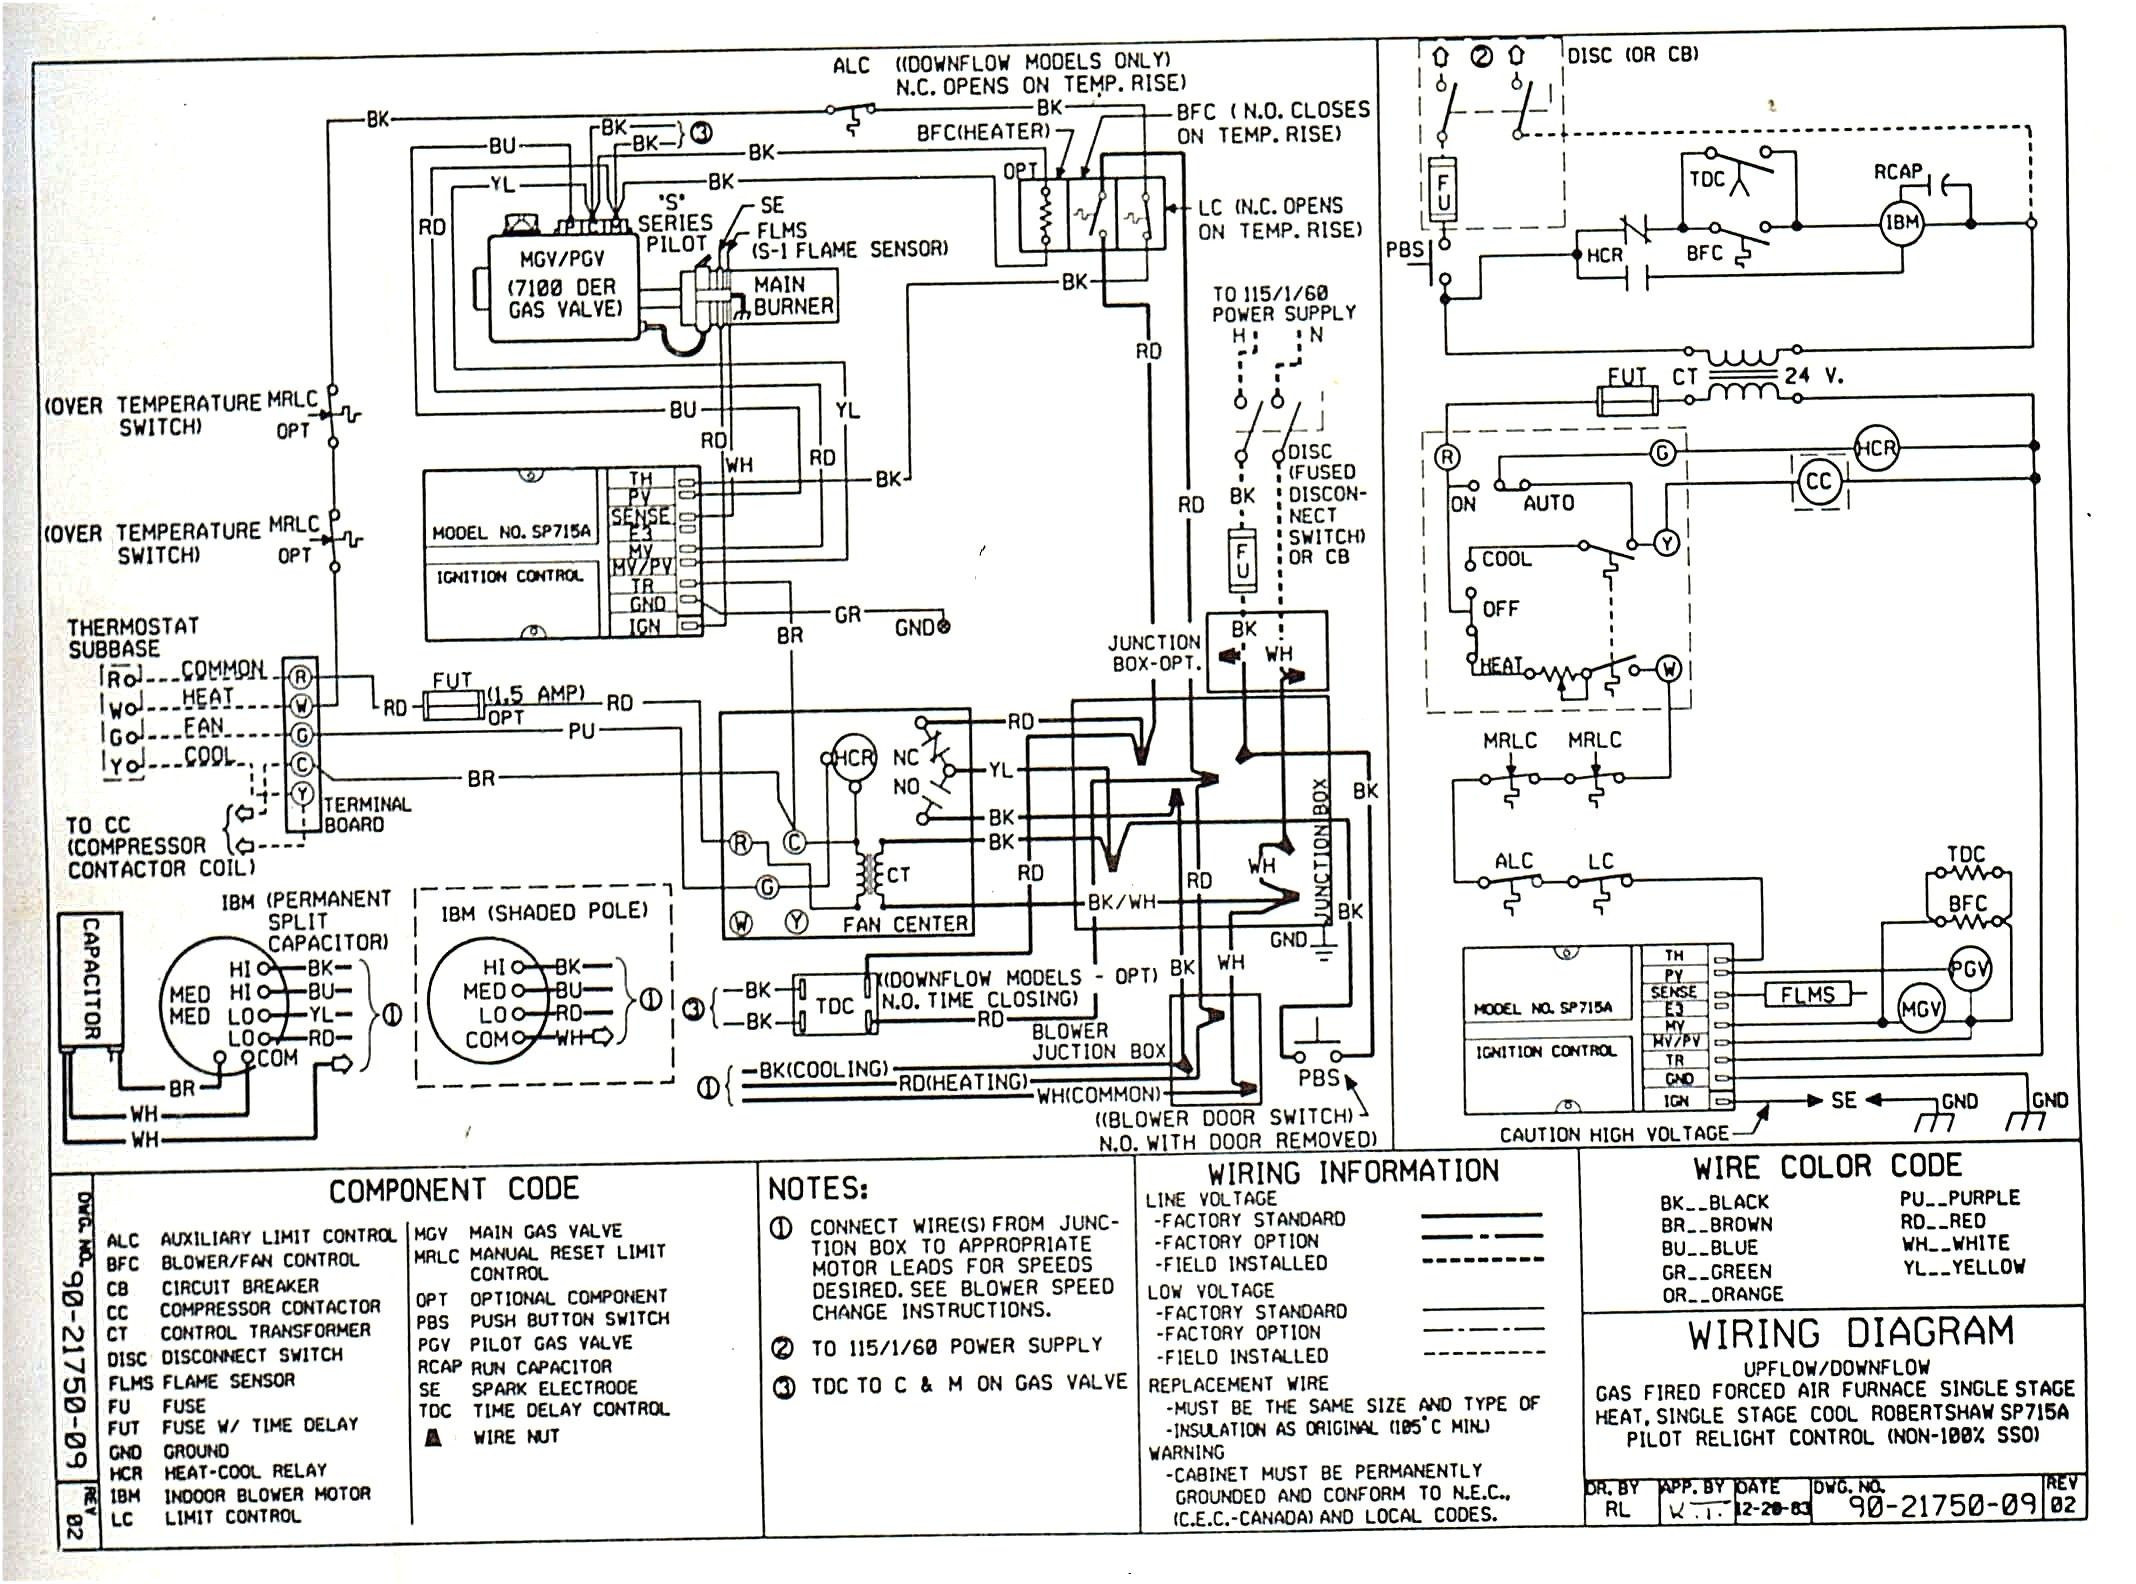 heil gas furnace wiring diagram 95 set wiring diagram database heil furnace wiring schema wiring diagram